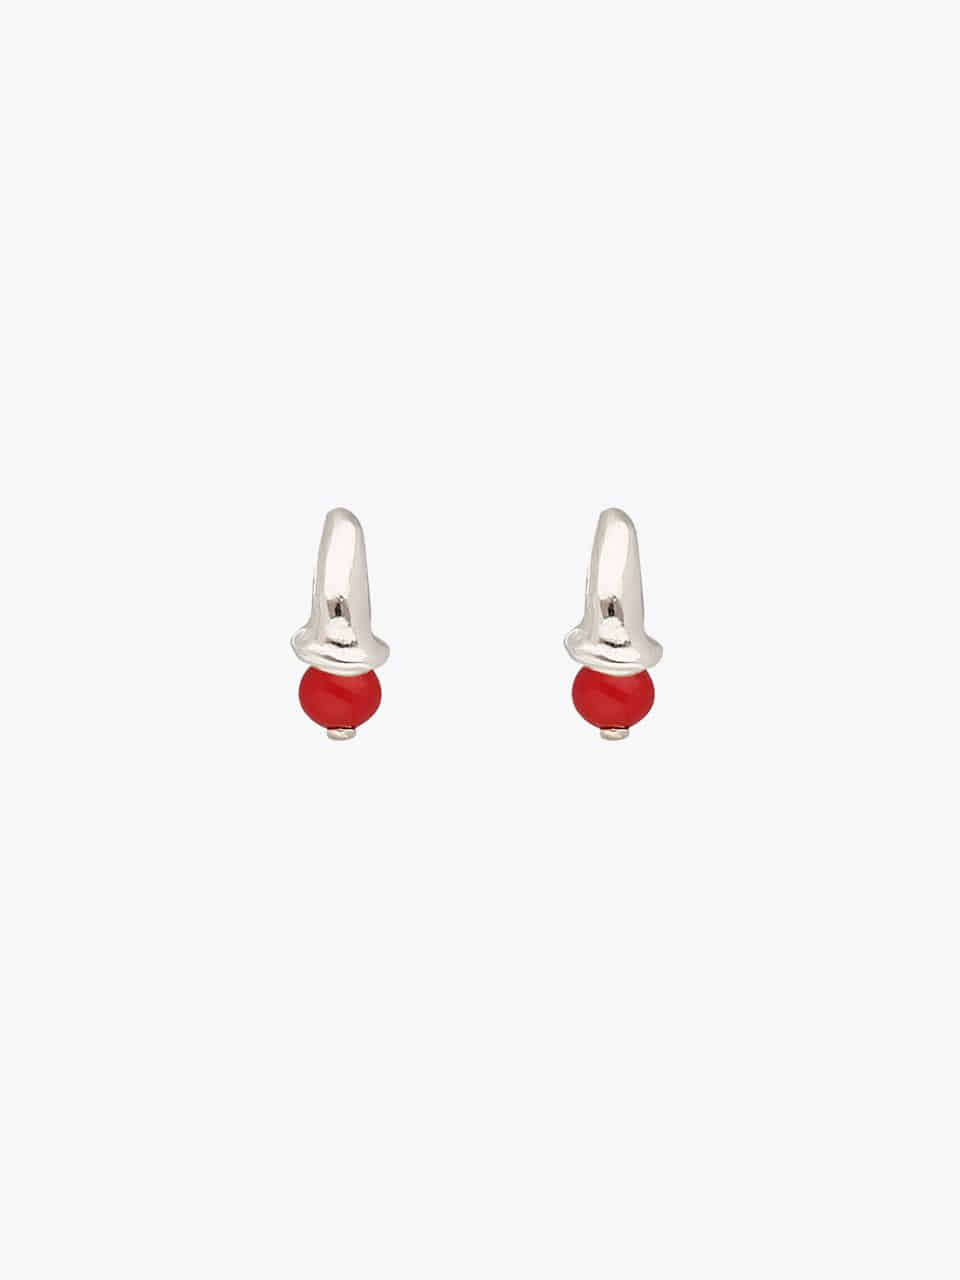 Red bud earring